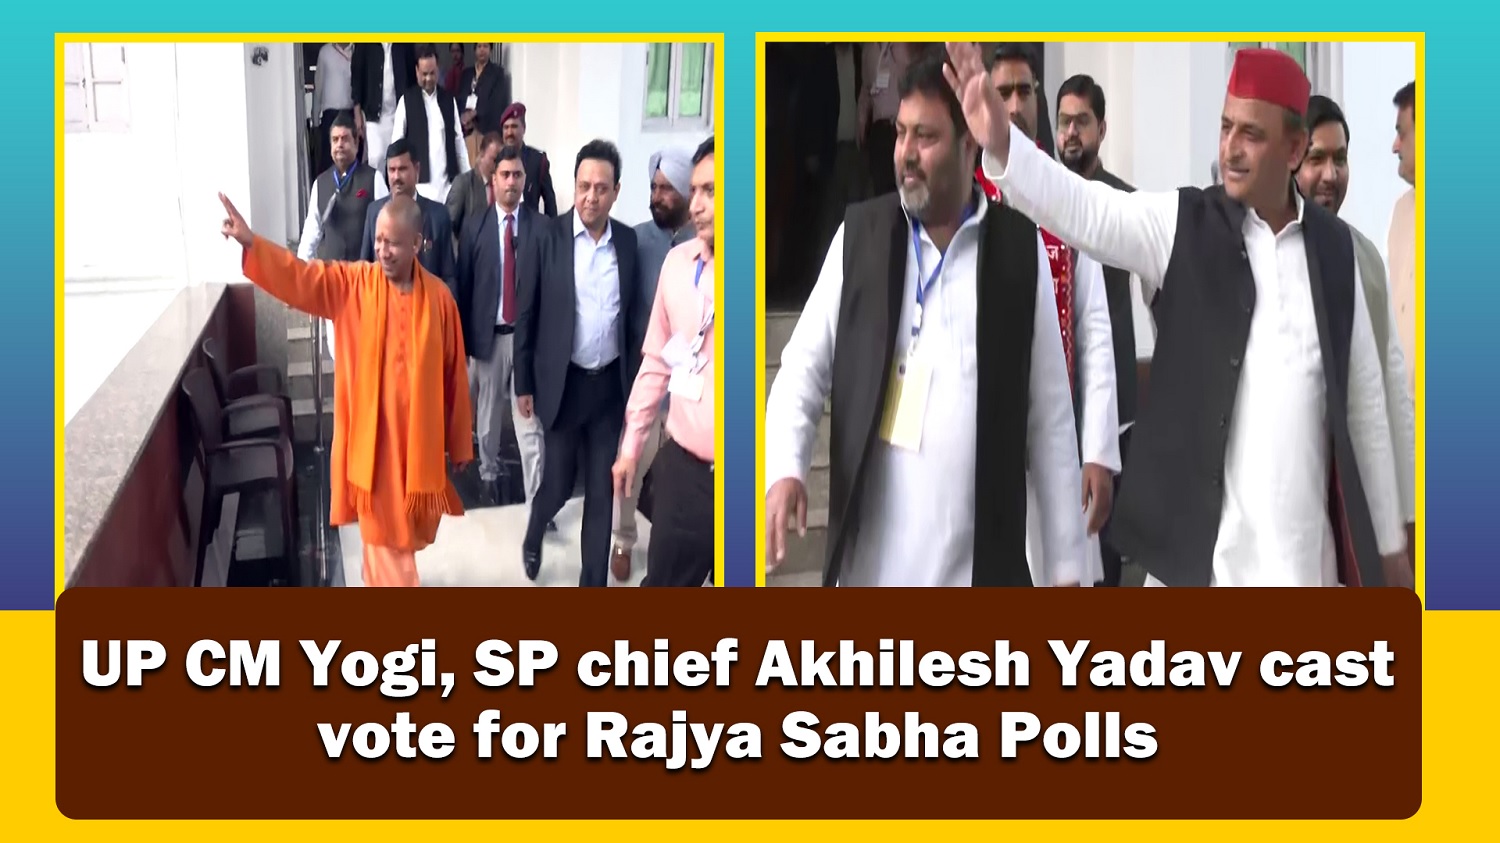 UP CM Yogi, SP chief Akhilesh Yadav cast vote for Rajya Sabha Polls